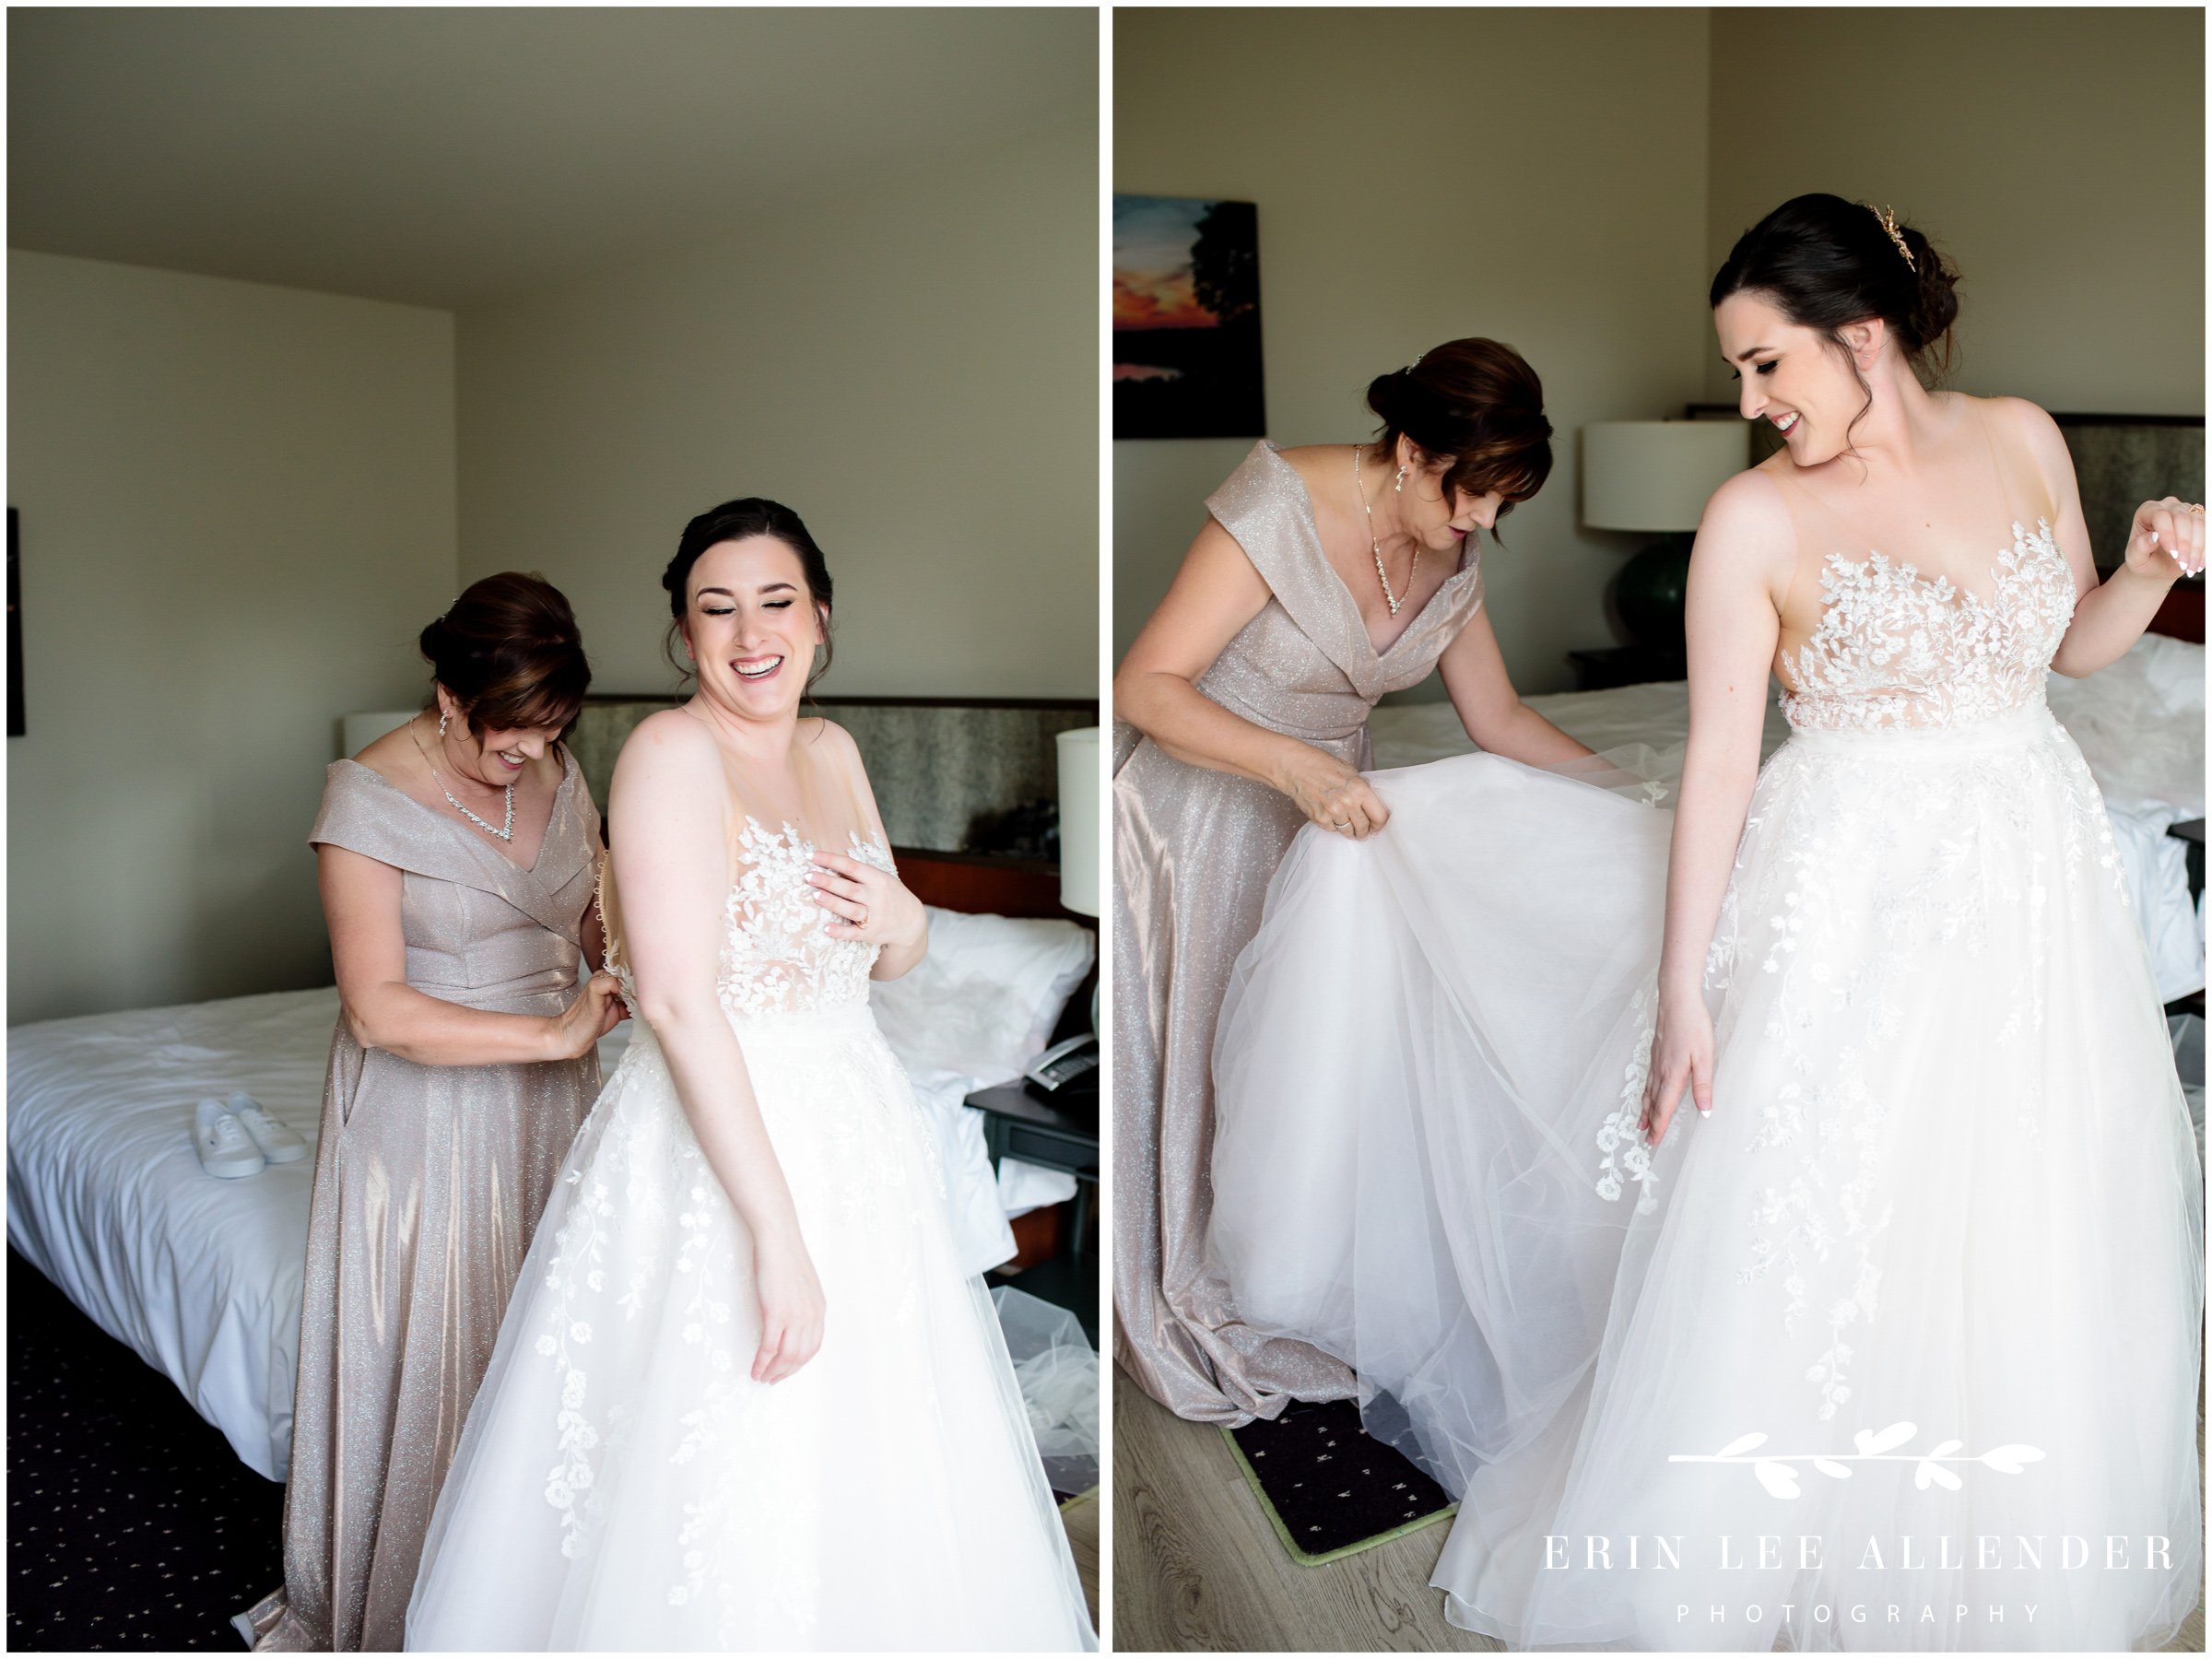 Bride-getting-ready-nashville